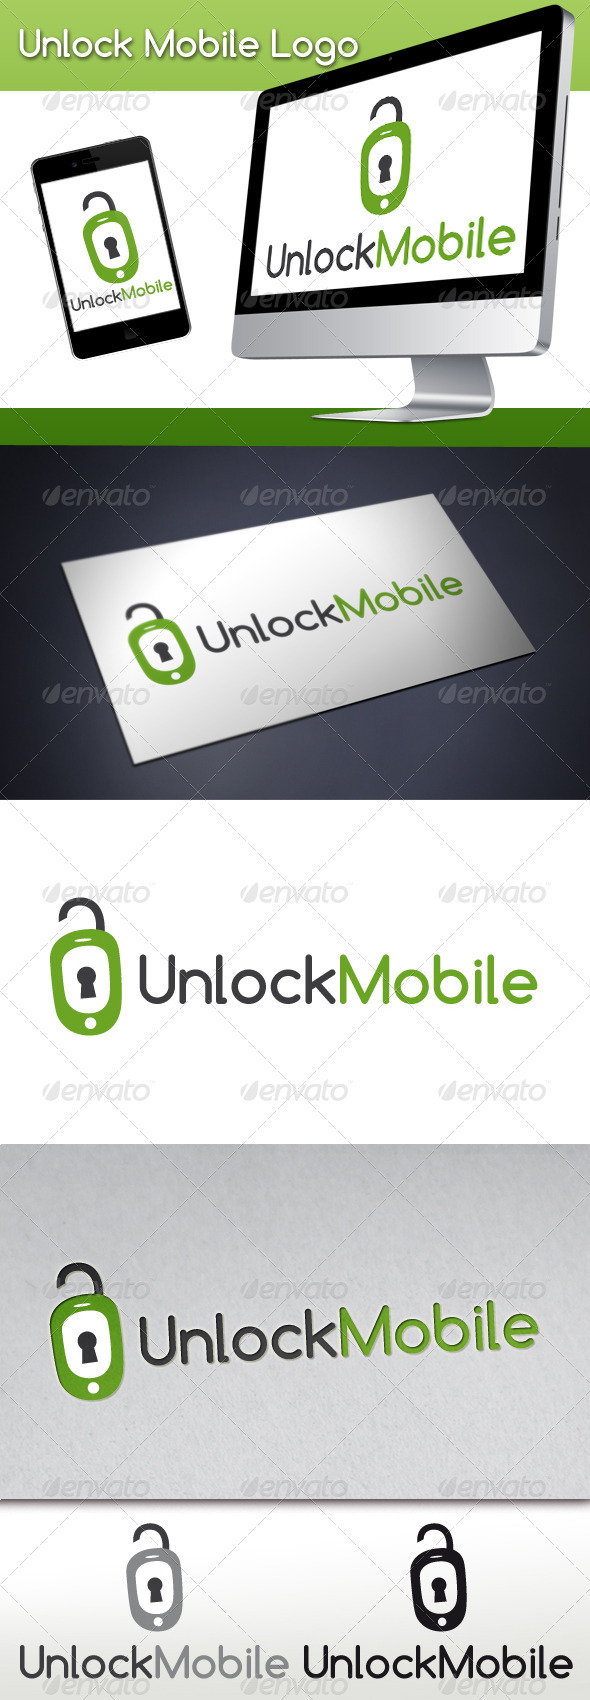 Unlock Mobile Logo